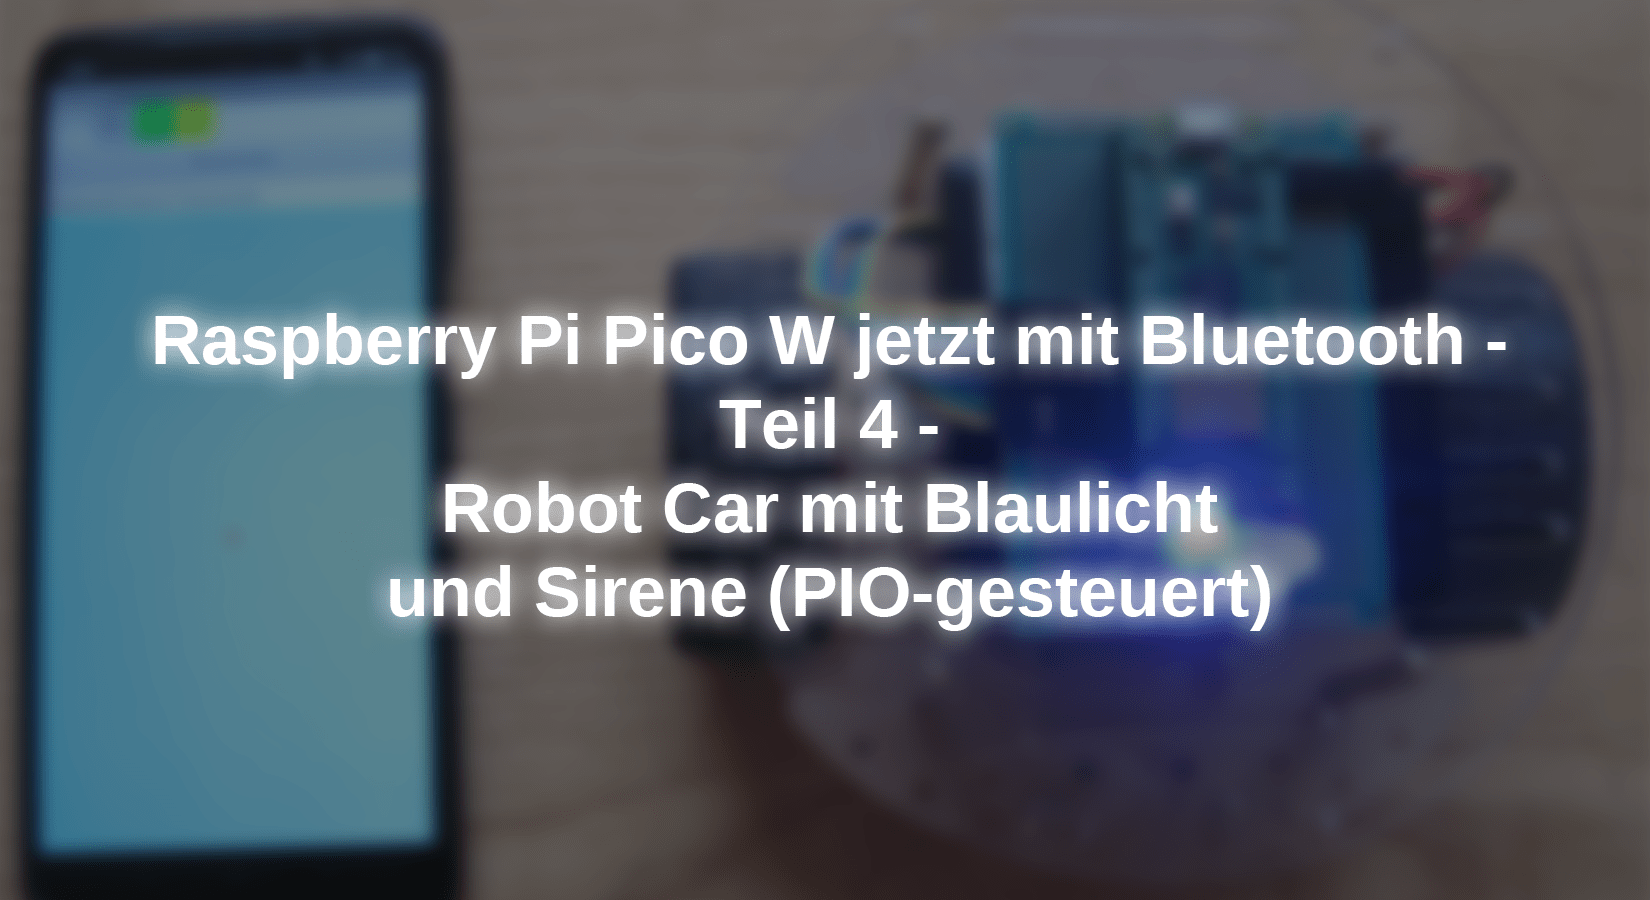 Raspberry Pi Pico W jetzt mit Bluetooth - Teil 4 - Robot Car mit Blaul